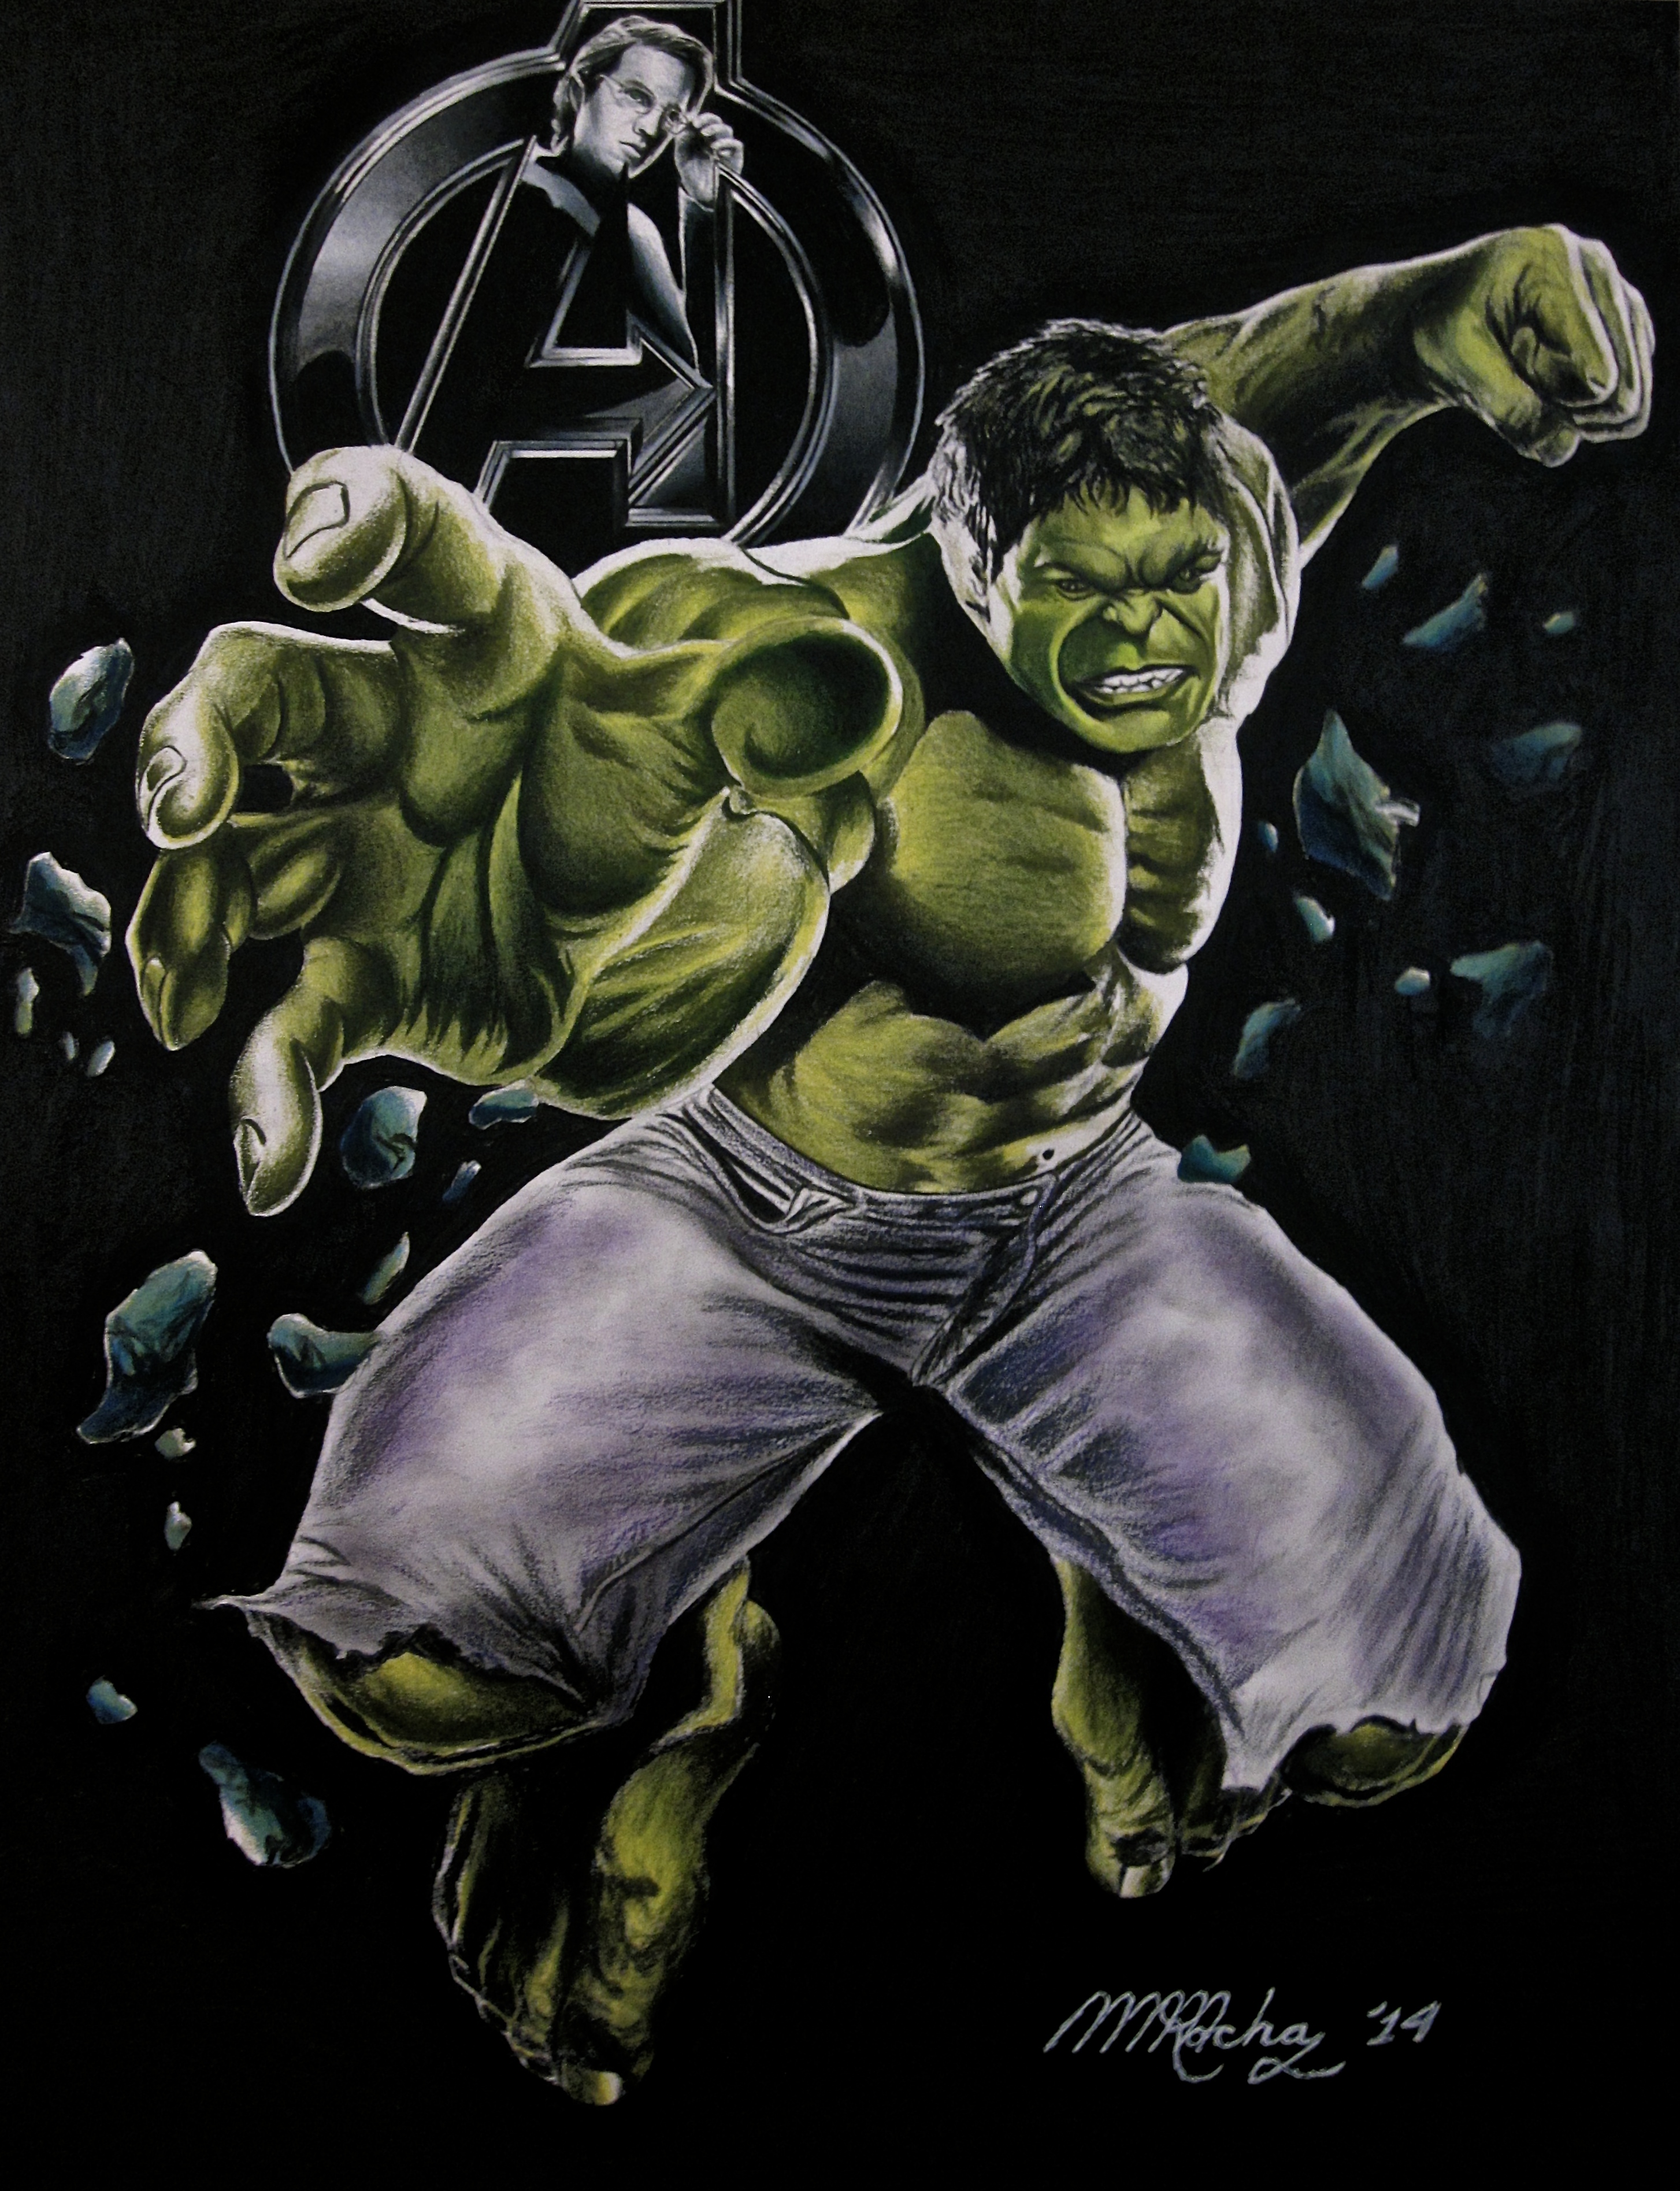 Hulk Pencil Sketch